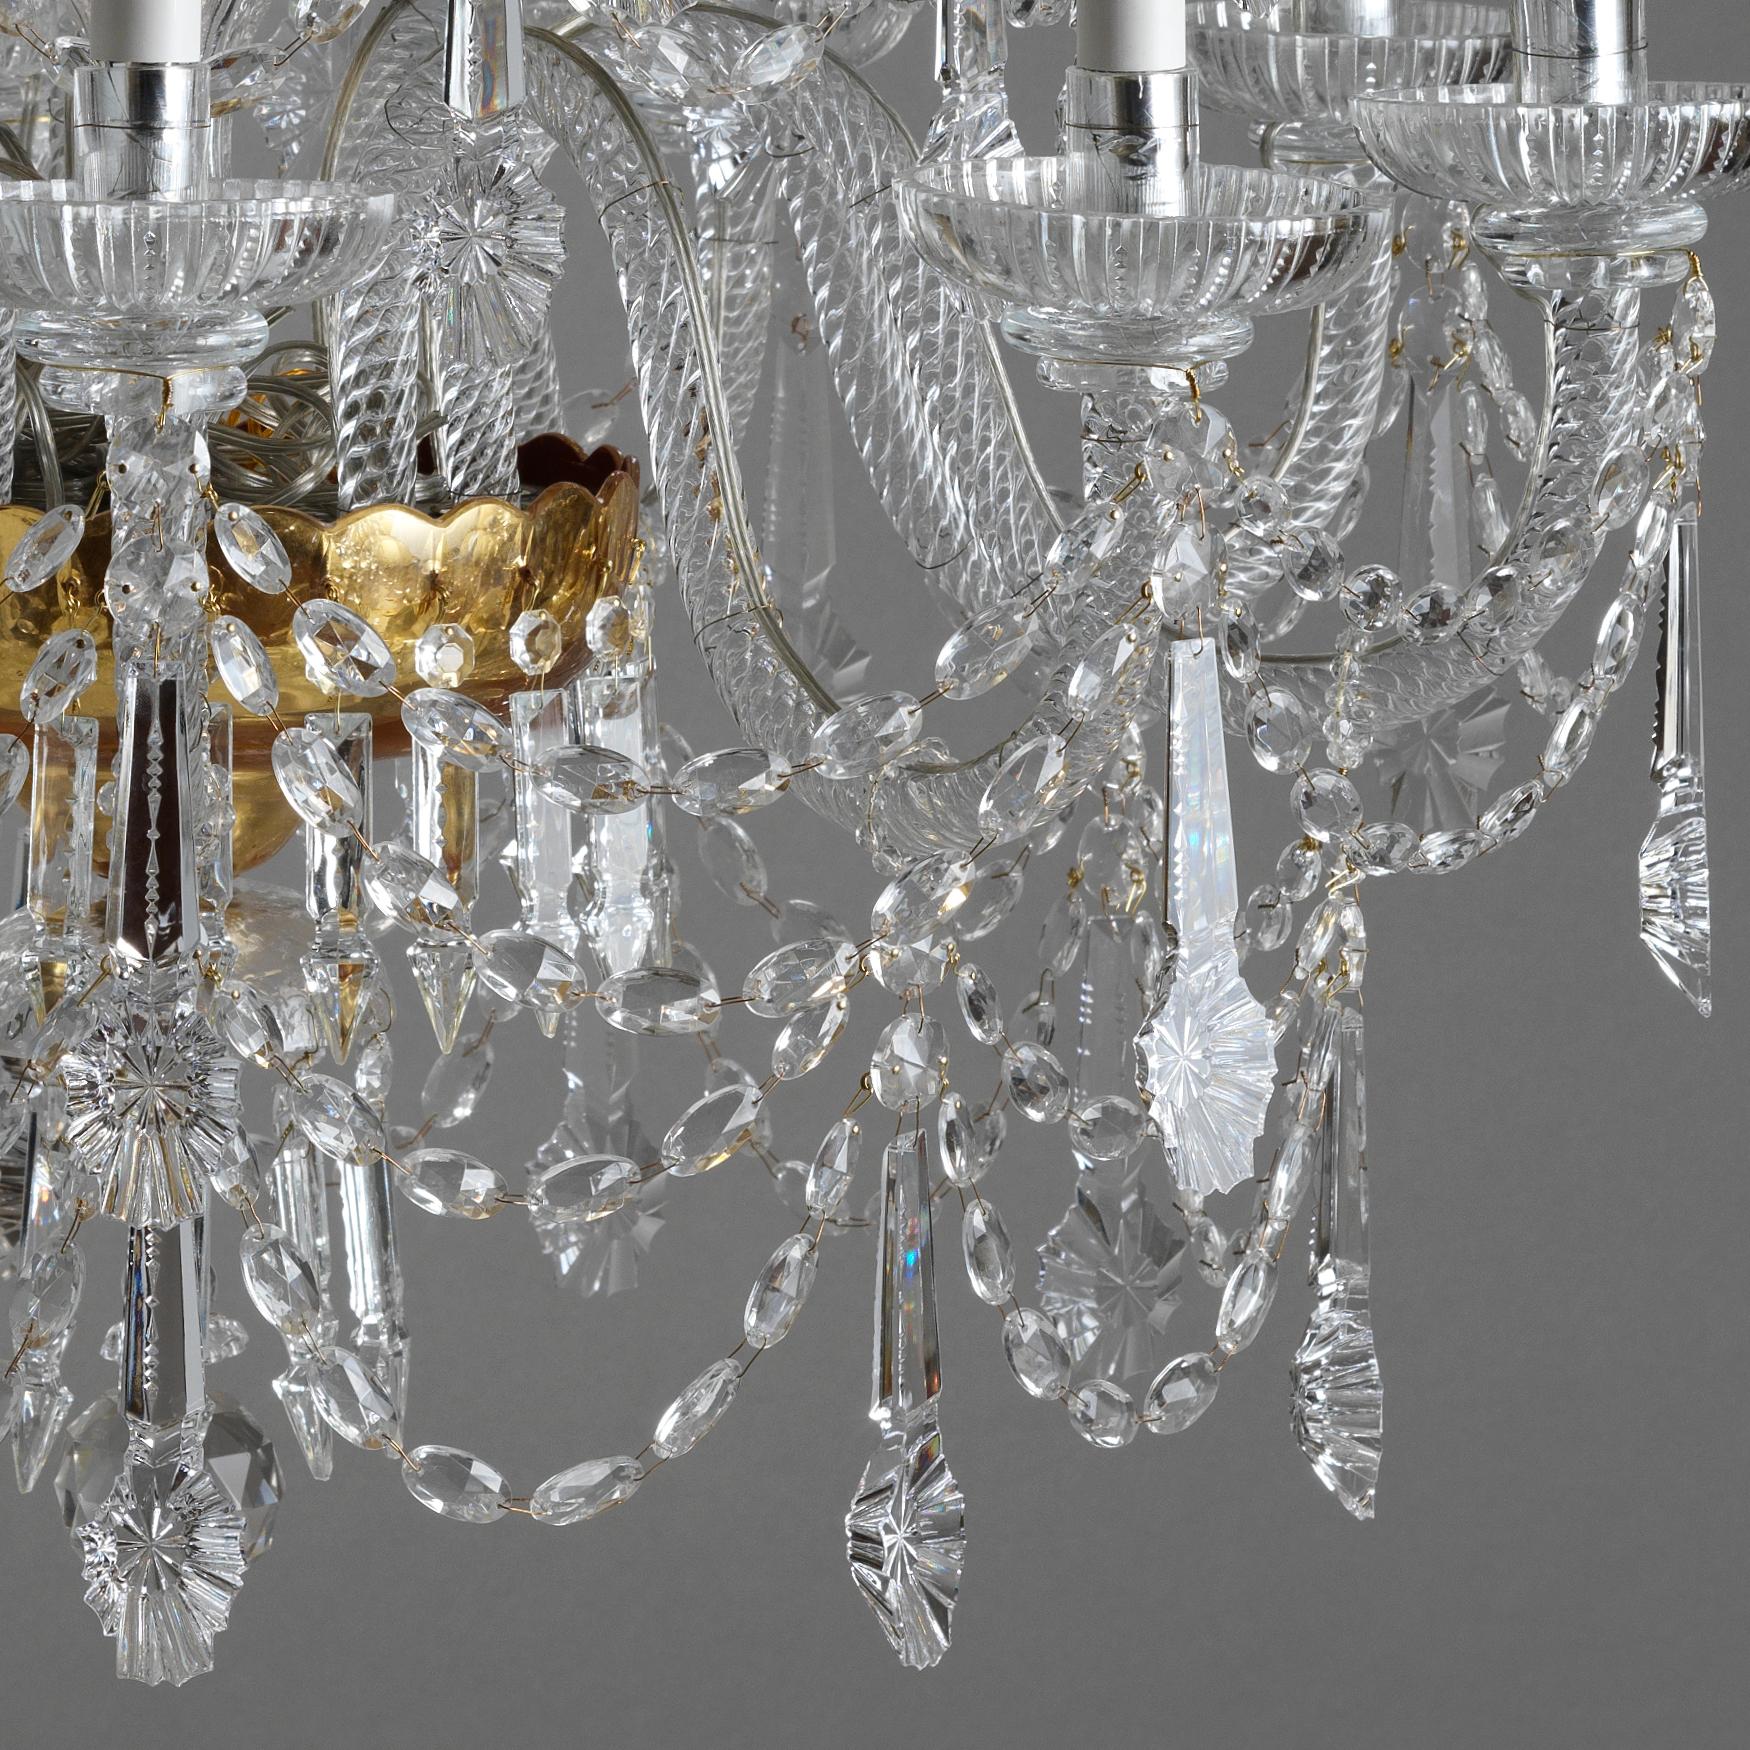 Rococo 18th Century Style Crystal and Blown Glass Chandelier by Gherardo Degli Albizzi For Sale